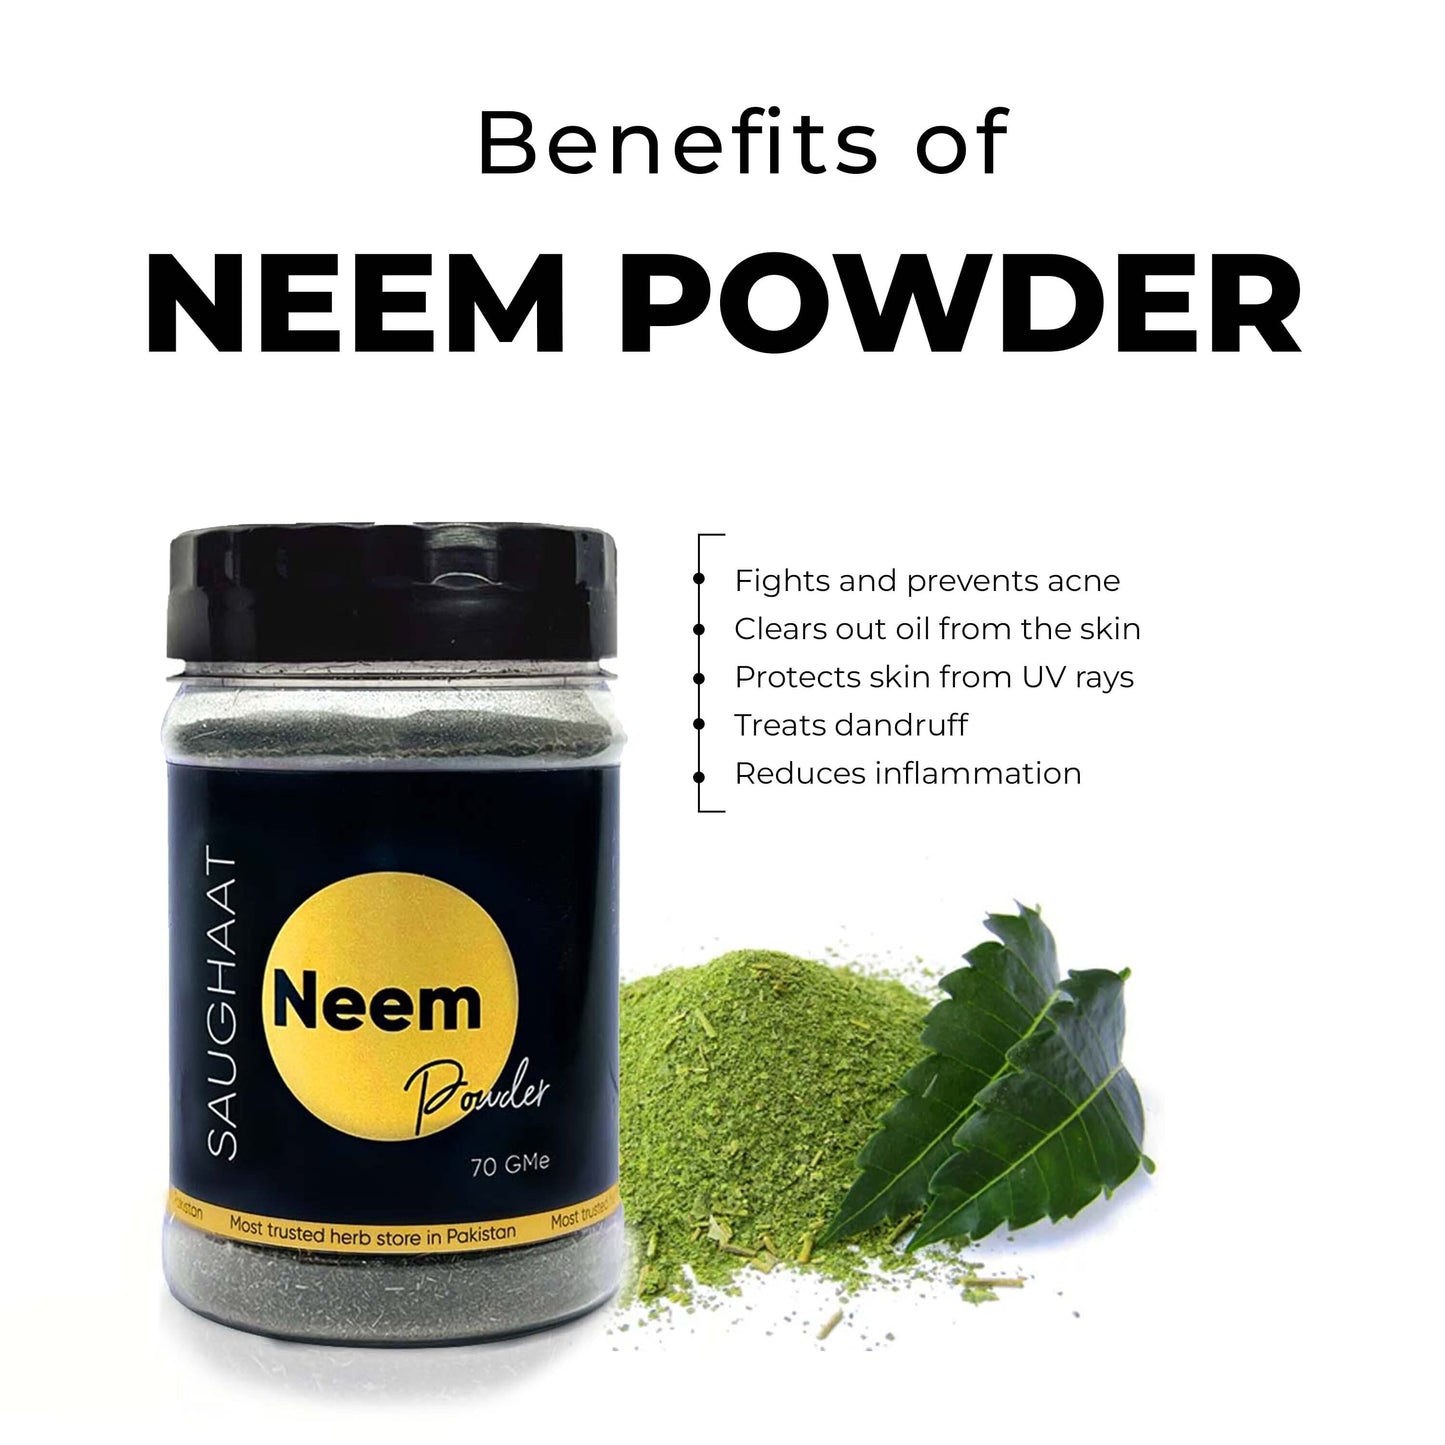 Benefits of neem powder